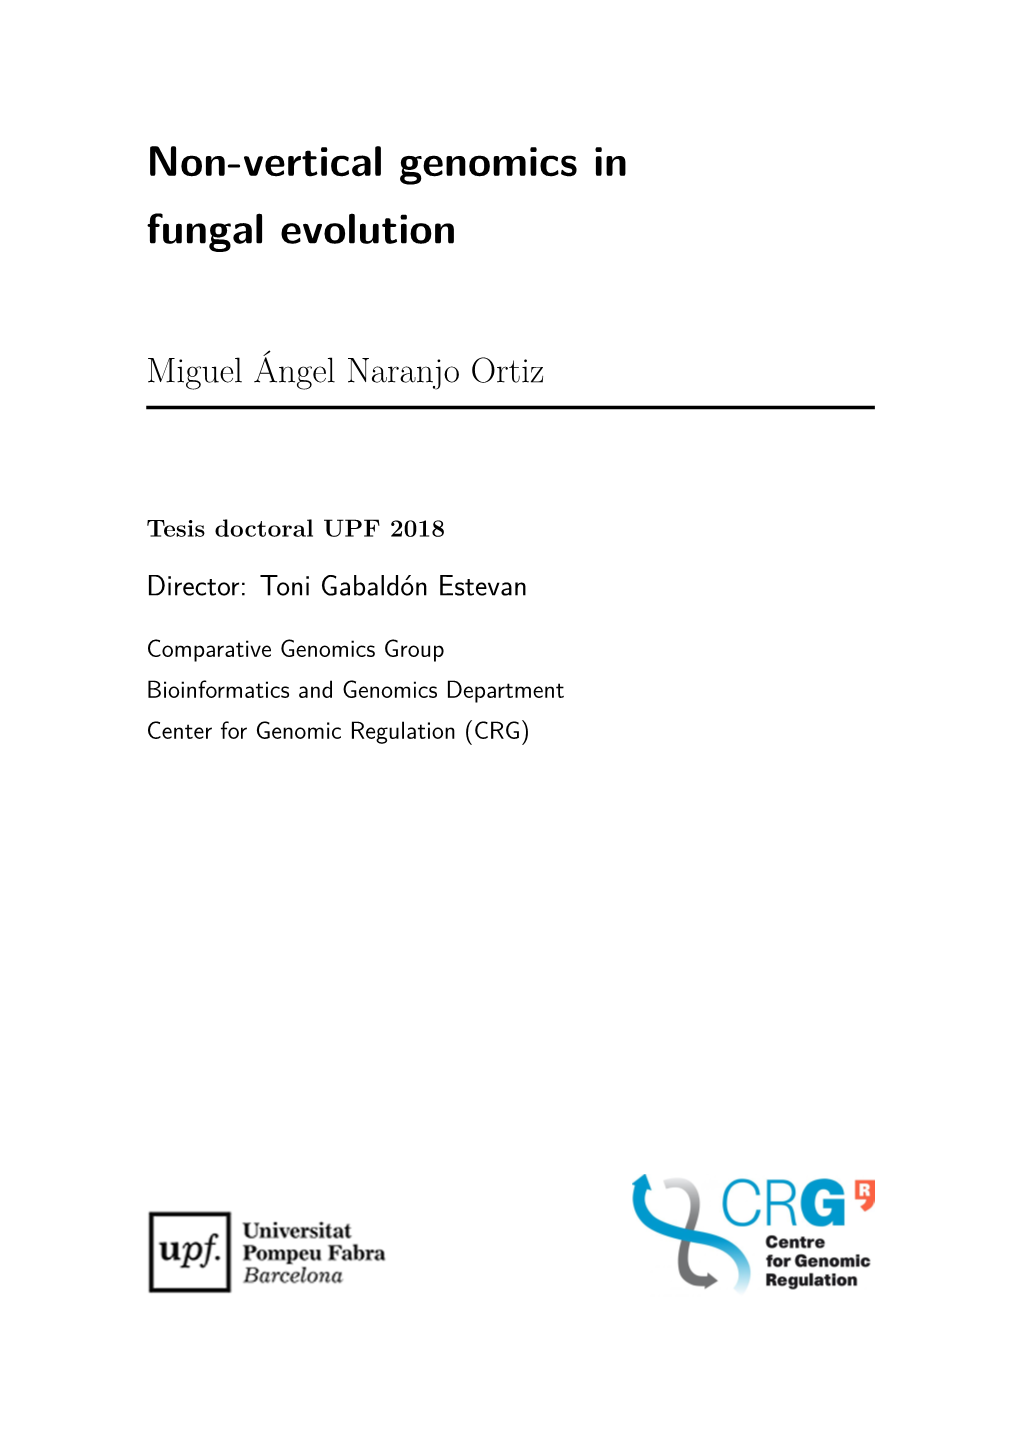 Non-Vertical Genomics in Fungal Evolution